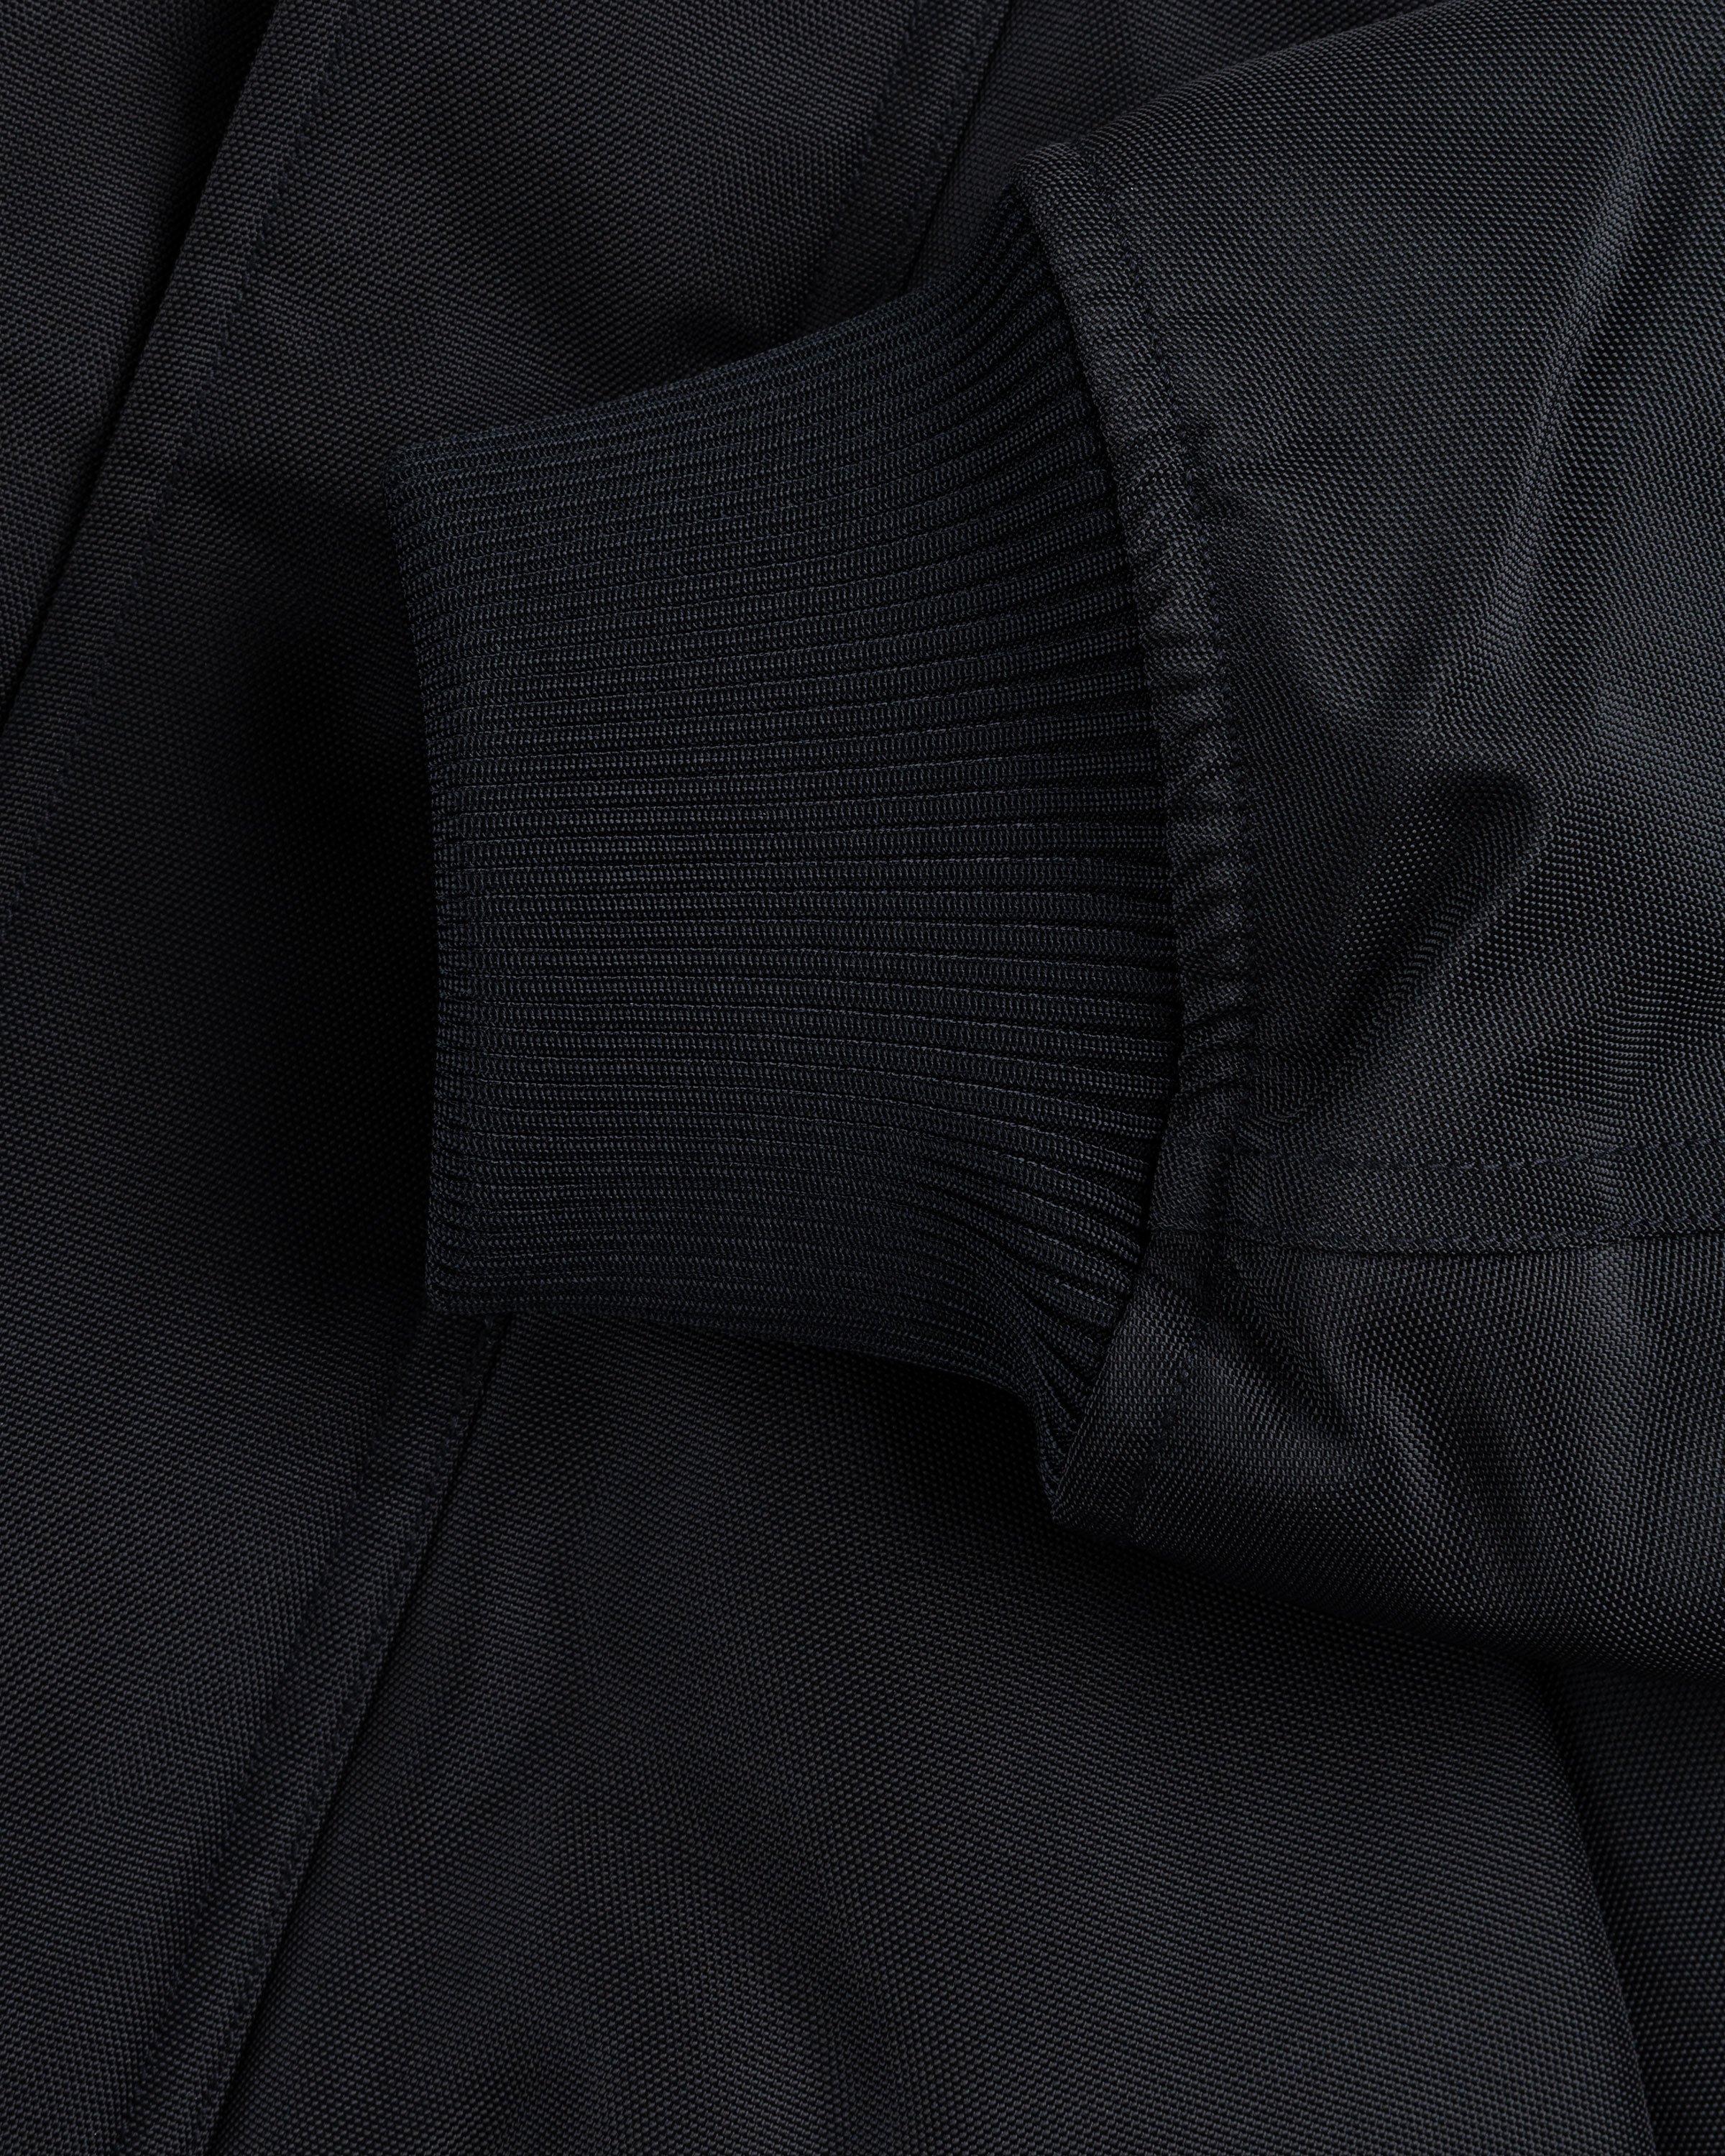 Acne Studios - Shearling Collar Jacket Black - Clothing - Black - Image 5